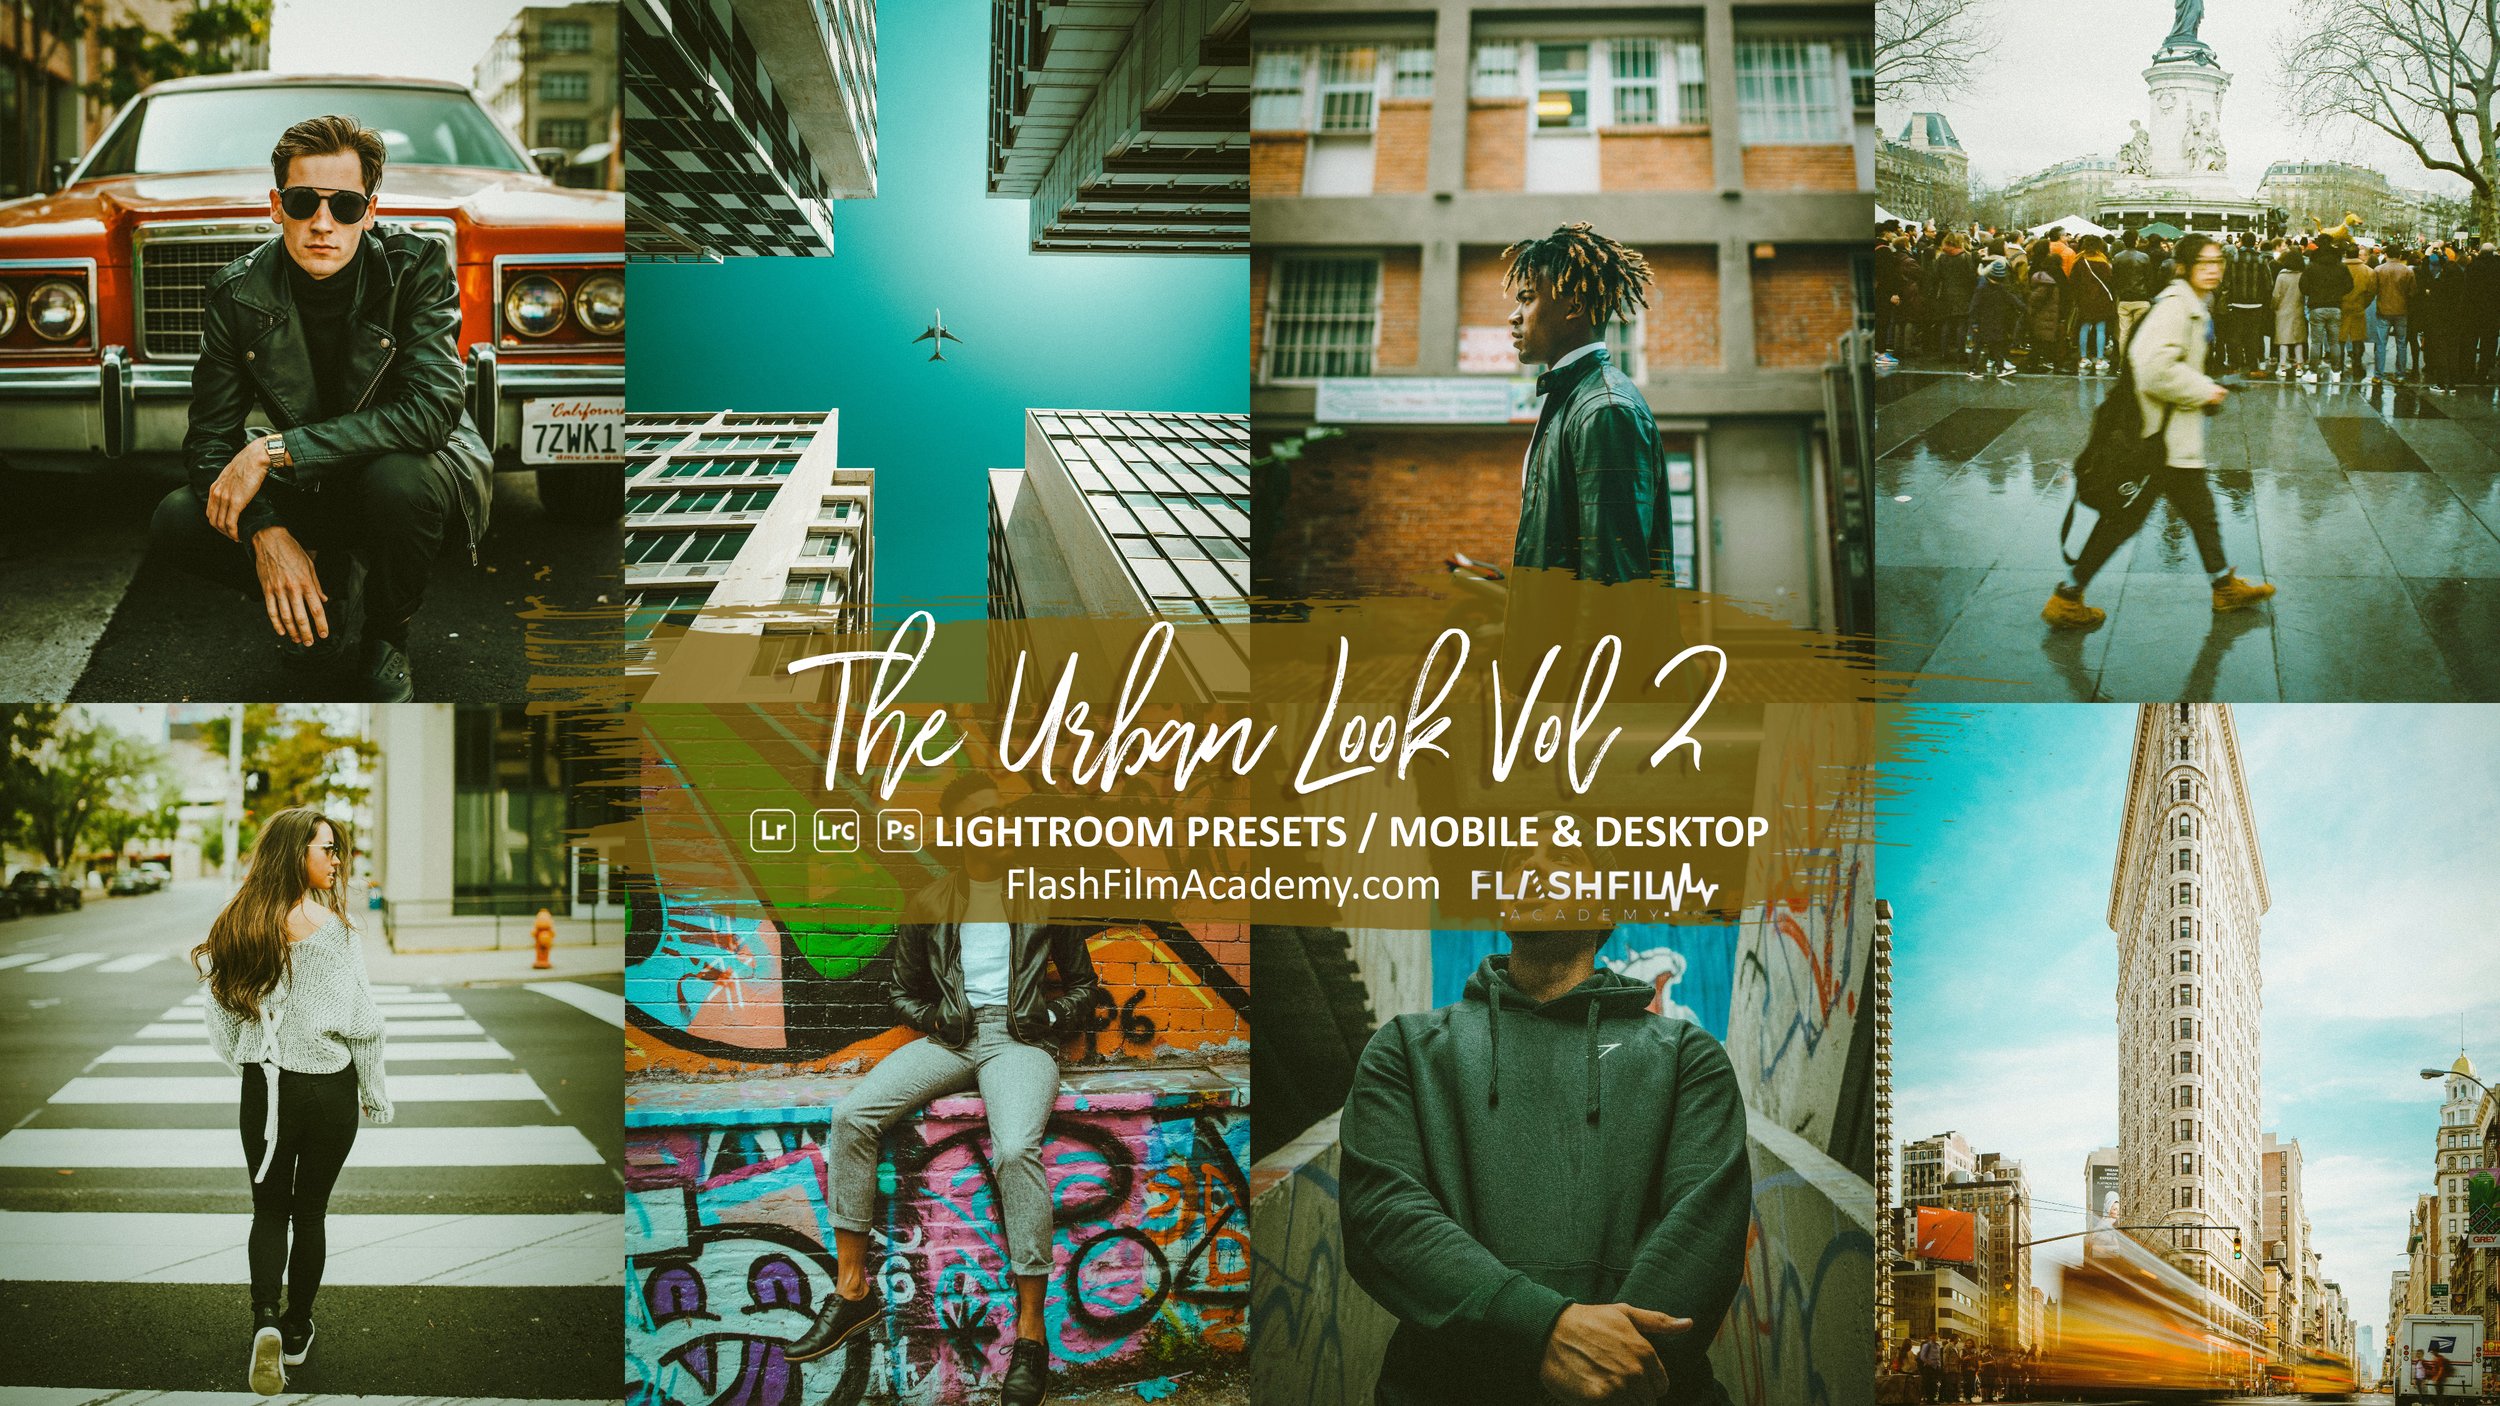 The Urban Look Vol 2